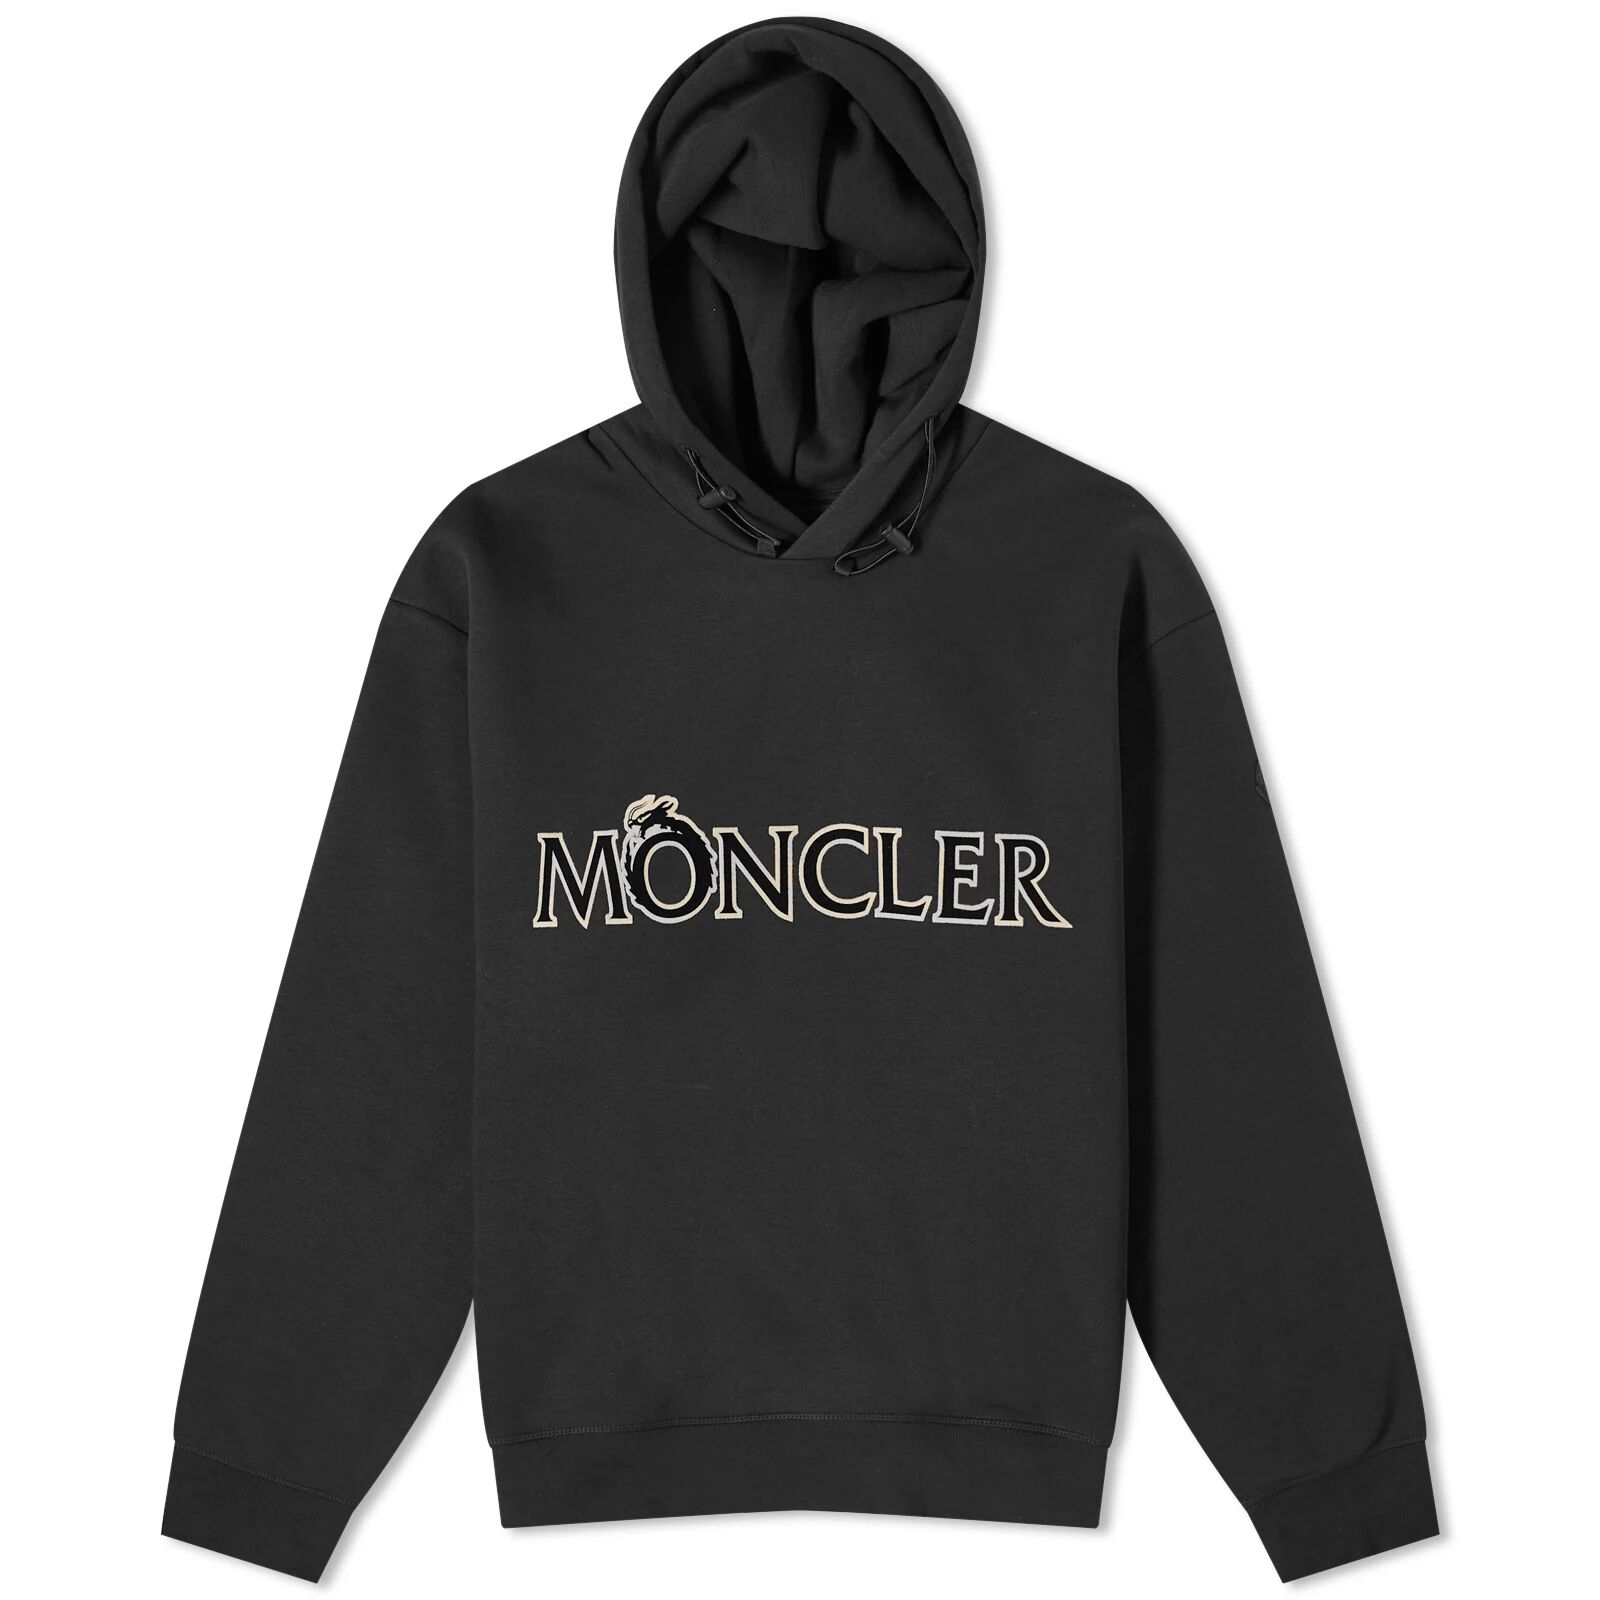 Moncler Men's Dragon Flocked Logo Popover Hoody in Black, Size Large